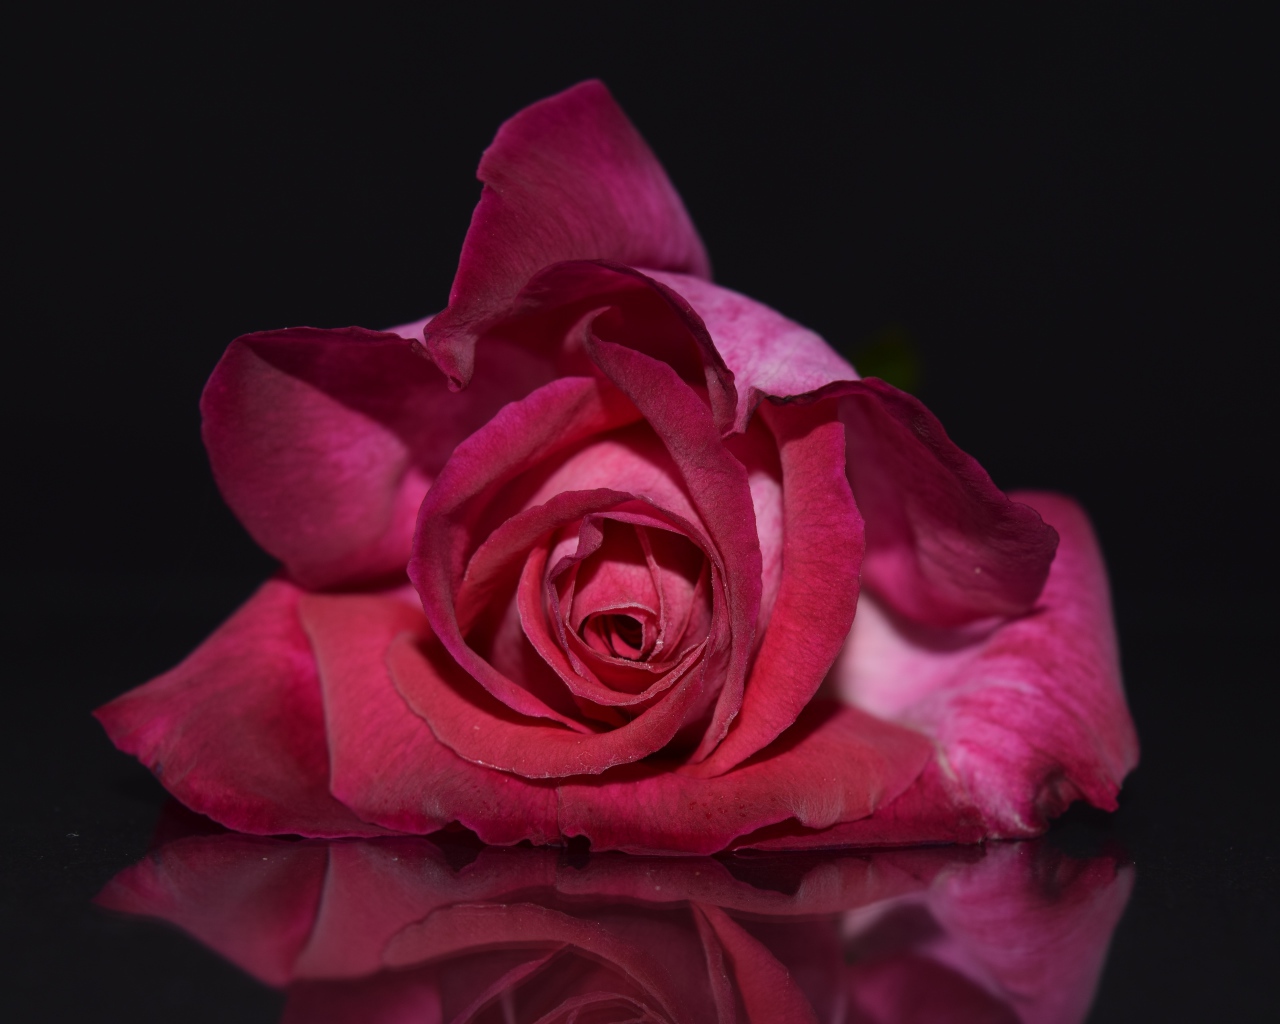 Нежная красная роза на сером фоне 